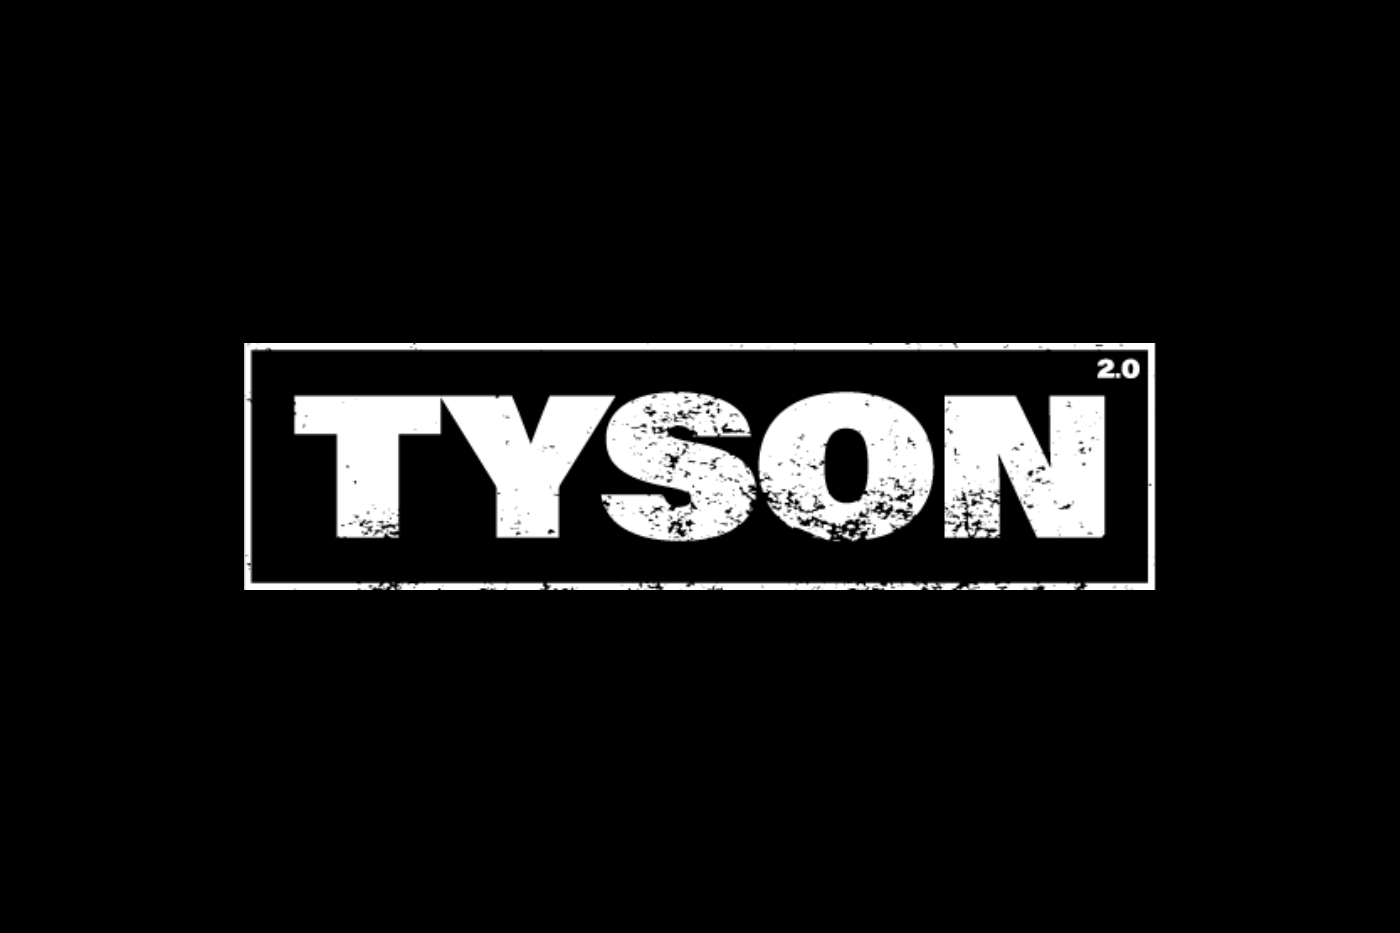 Mike Tyson Logo Tyson 2.0, Mike Tyson's Premium Cannabis Brand, Announces Key